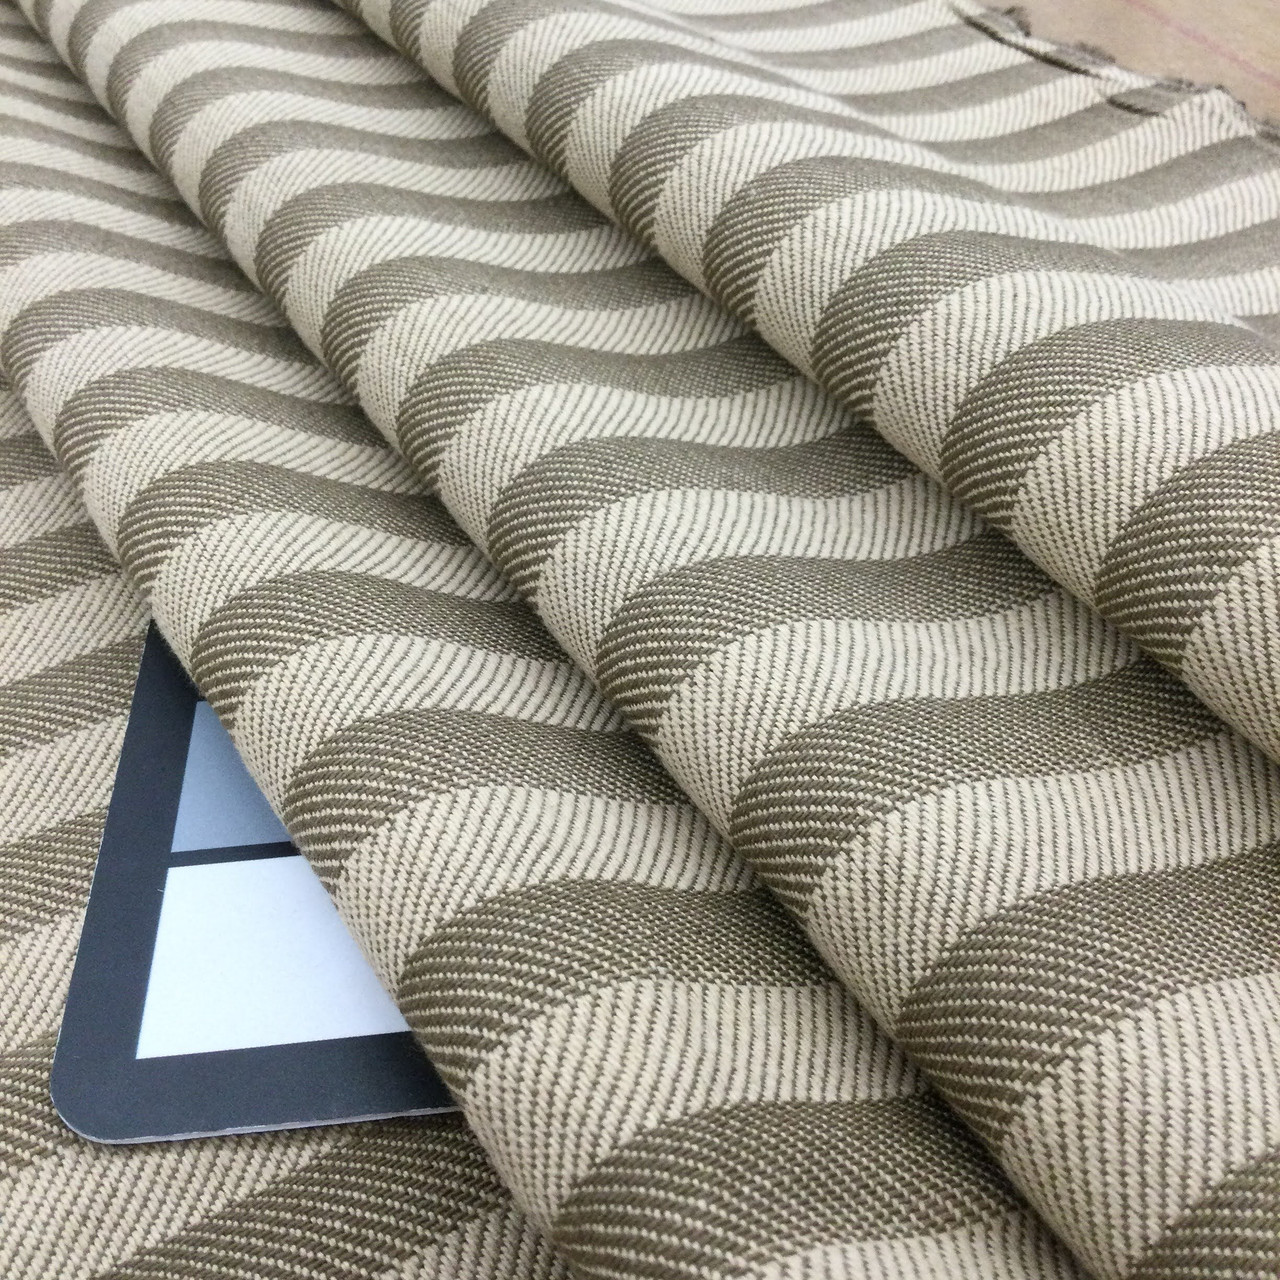 Beige Two-Tone Herringbone Lining Fabric, Sold by The Yard